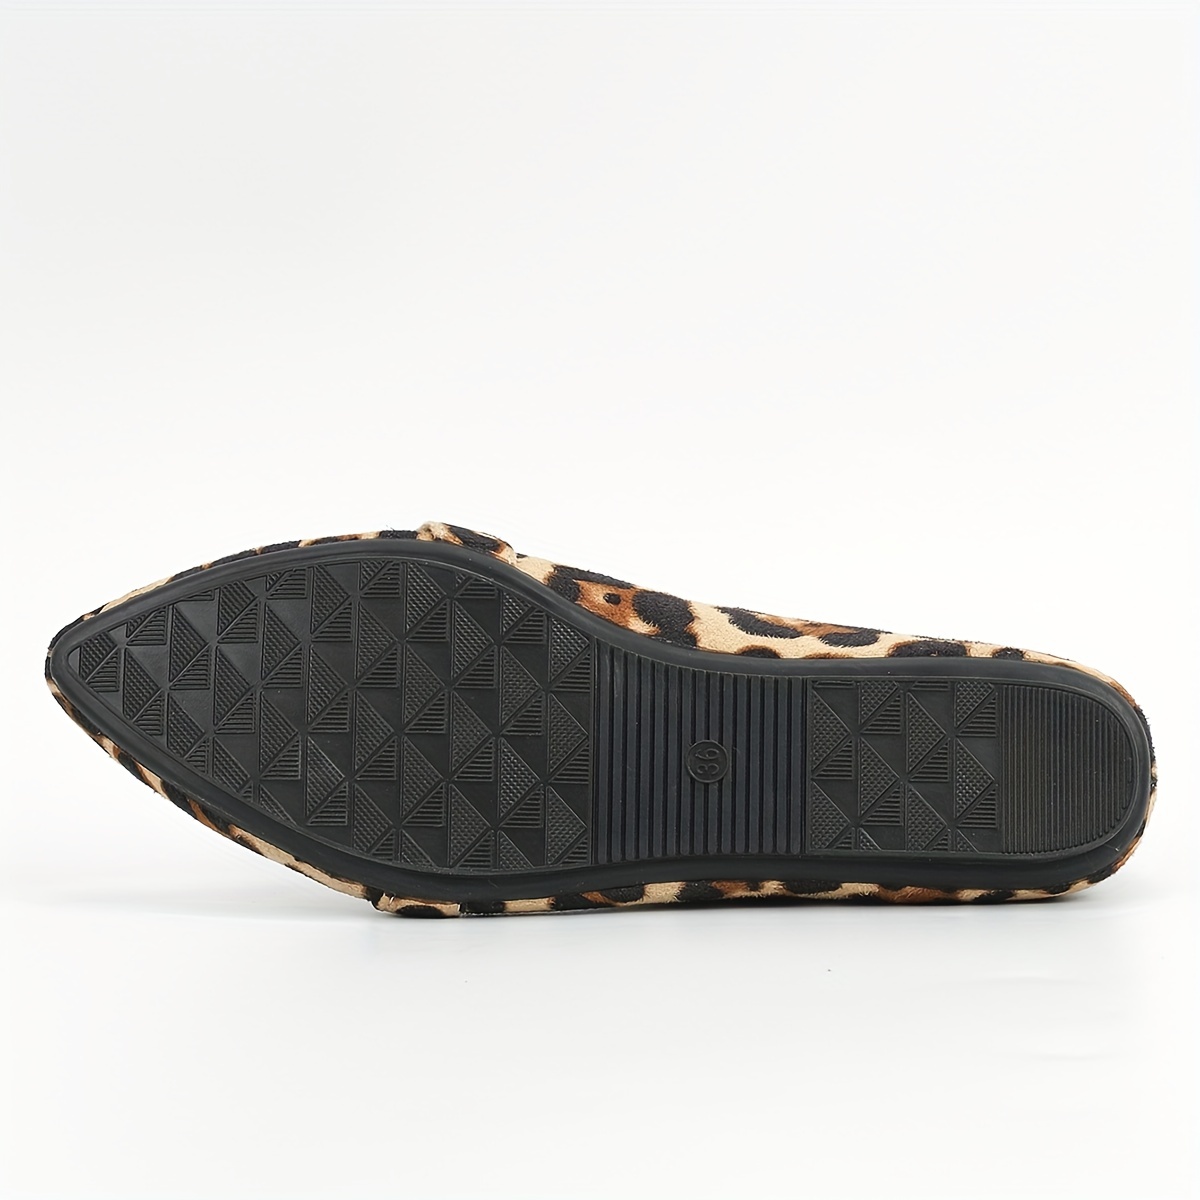 BRIGHTON Beige Teal Leopard Print Ballet Flat Shoe Size 7-1/2